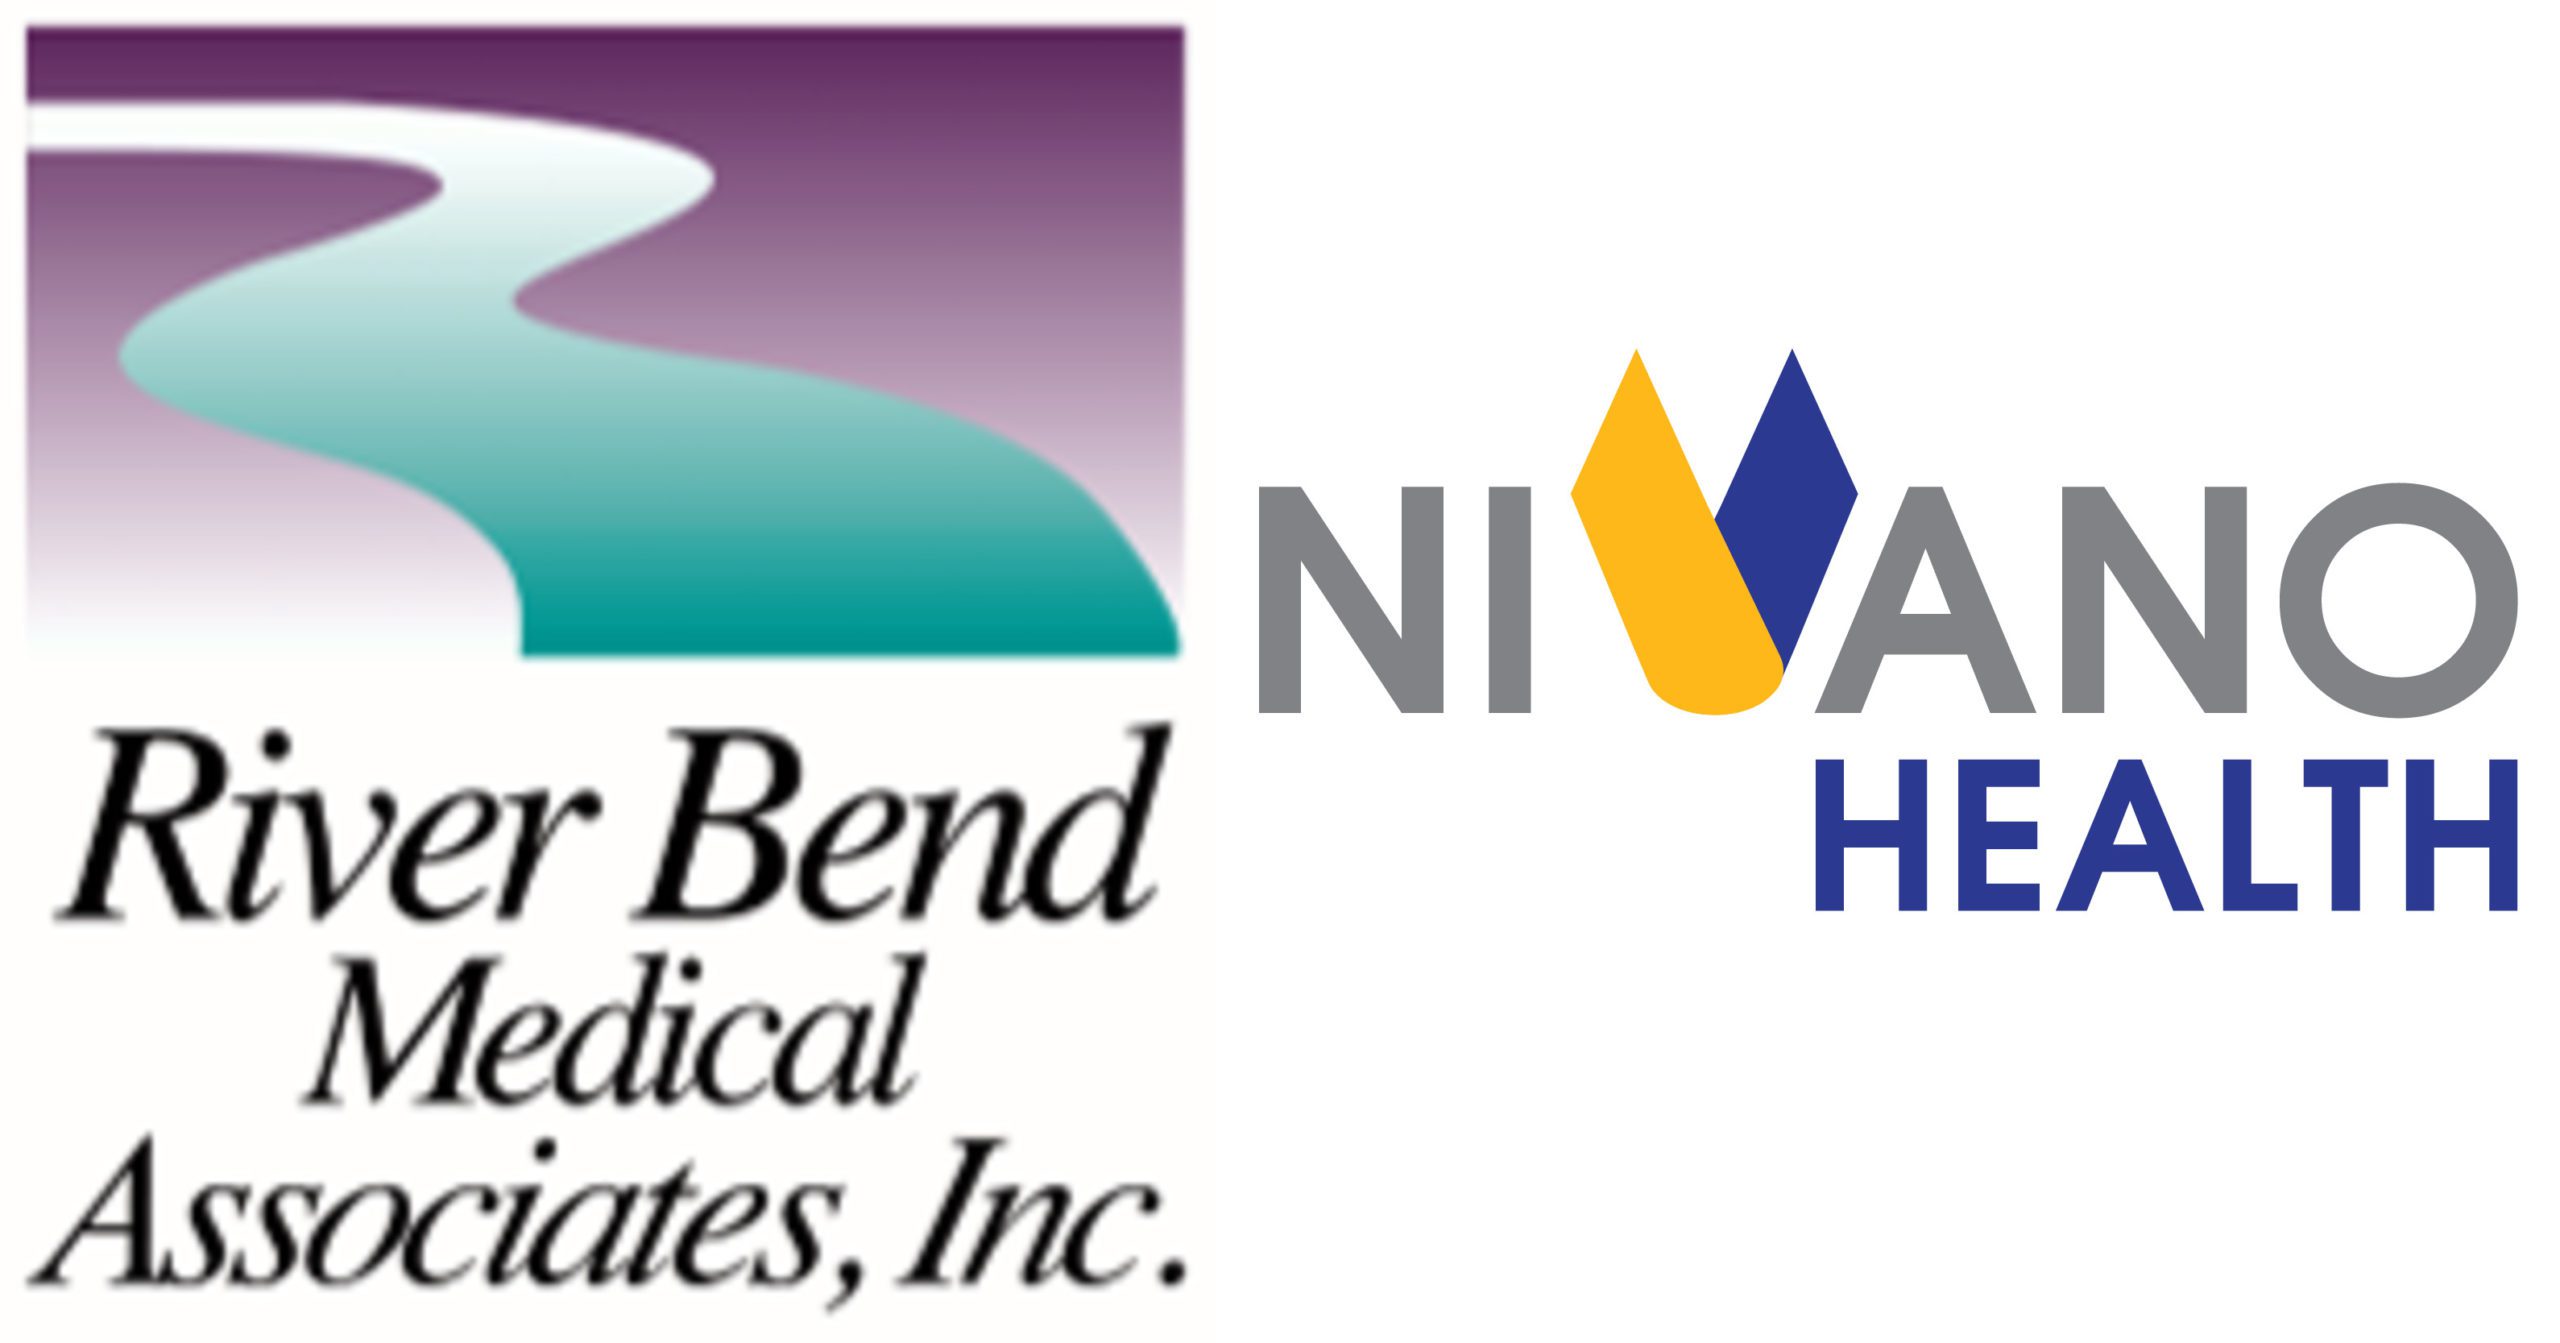 Nivano Health/River Bend Medical